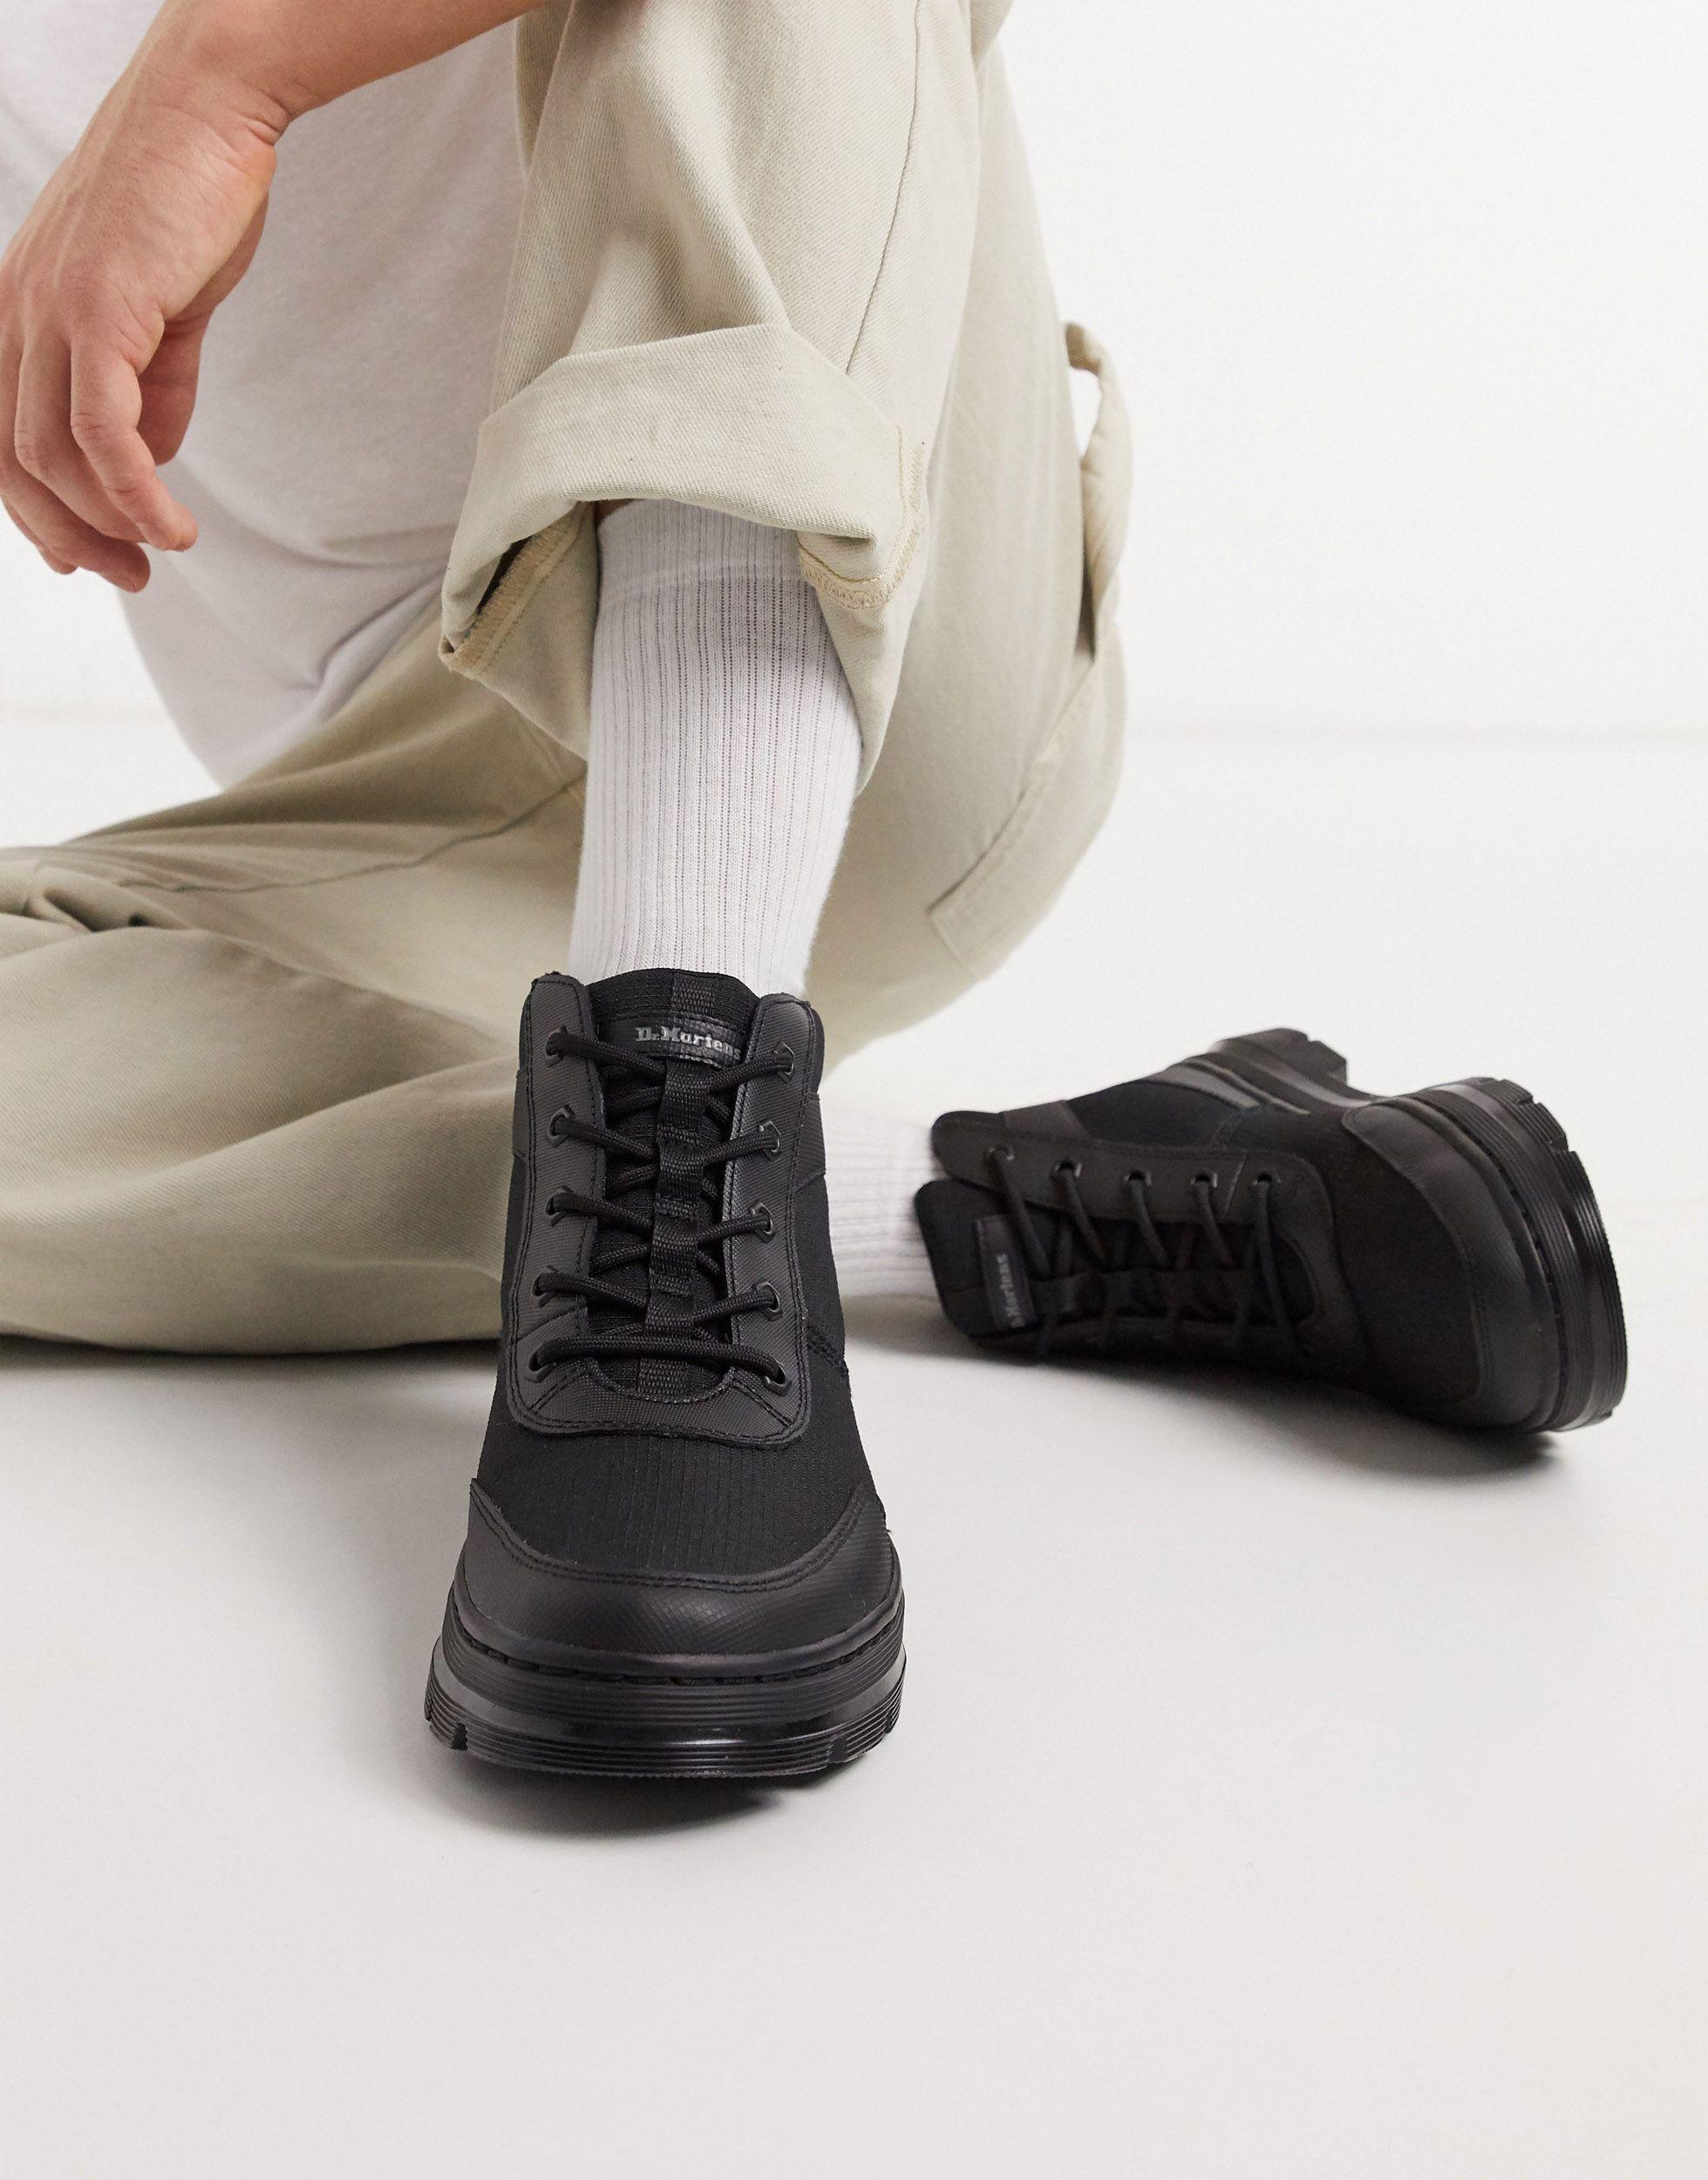 dr. martens bonny extra tough nylon chukka boots - black ,www.backtonaturelandcare.com